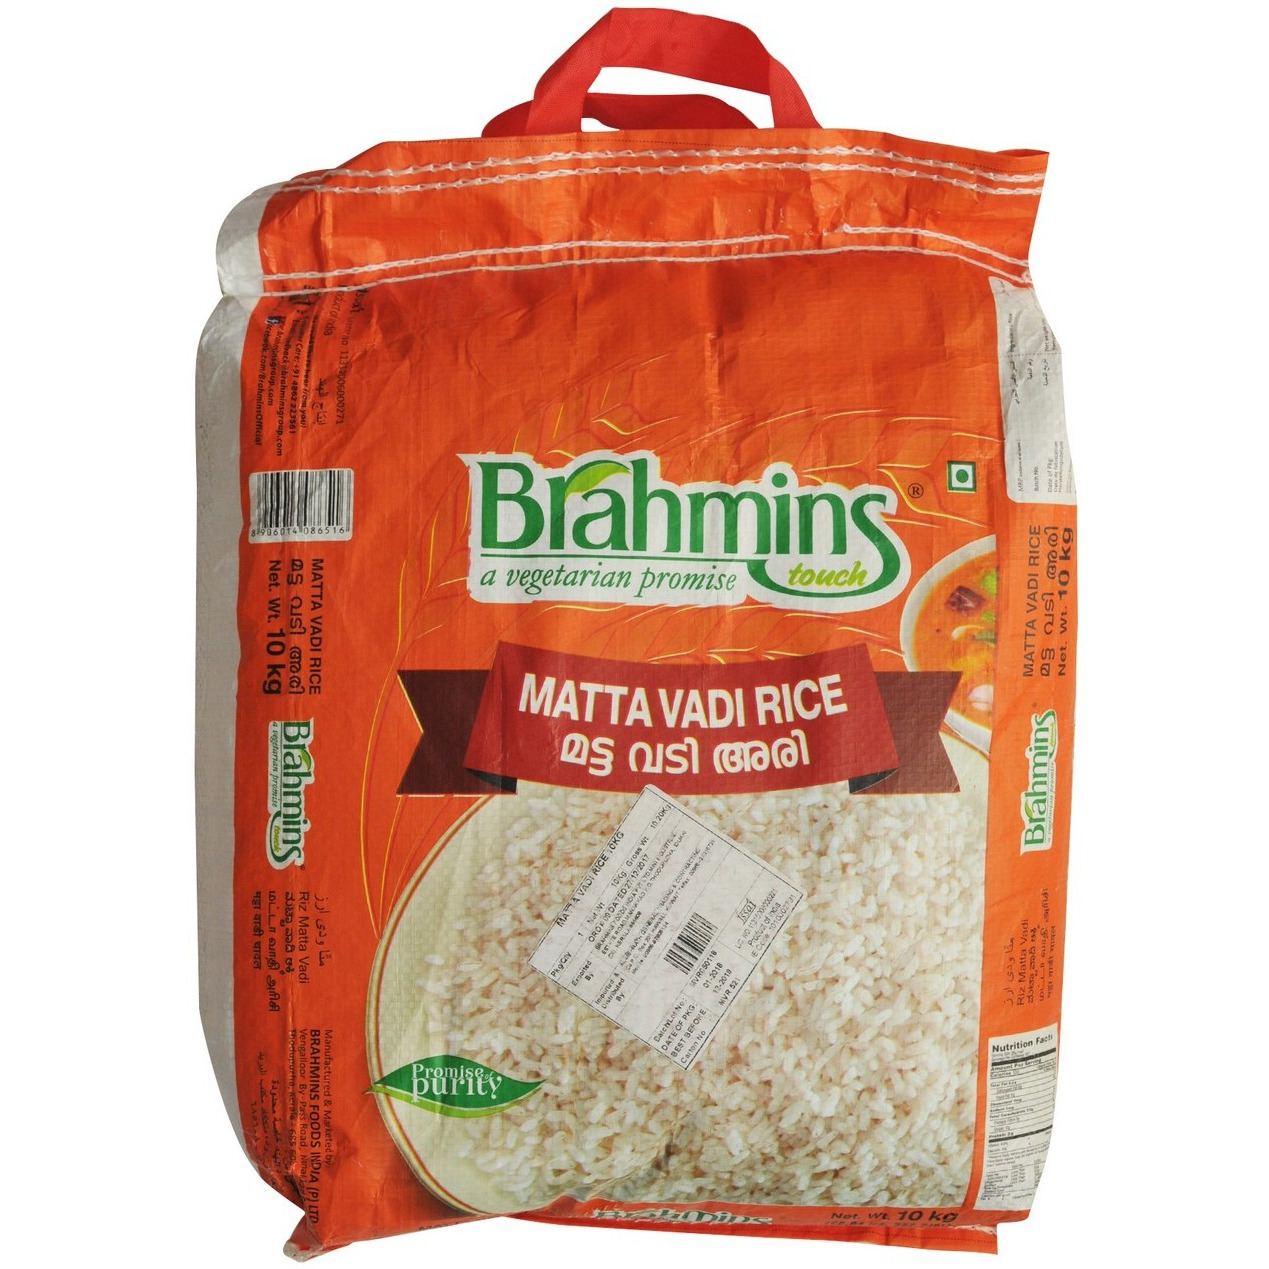 Brahmins Matta Vadi Rice - 10 Kg (22 Lb)